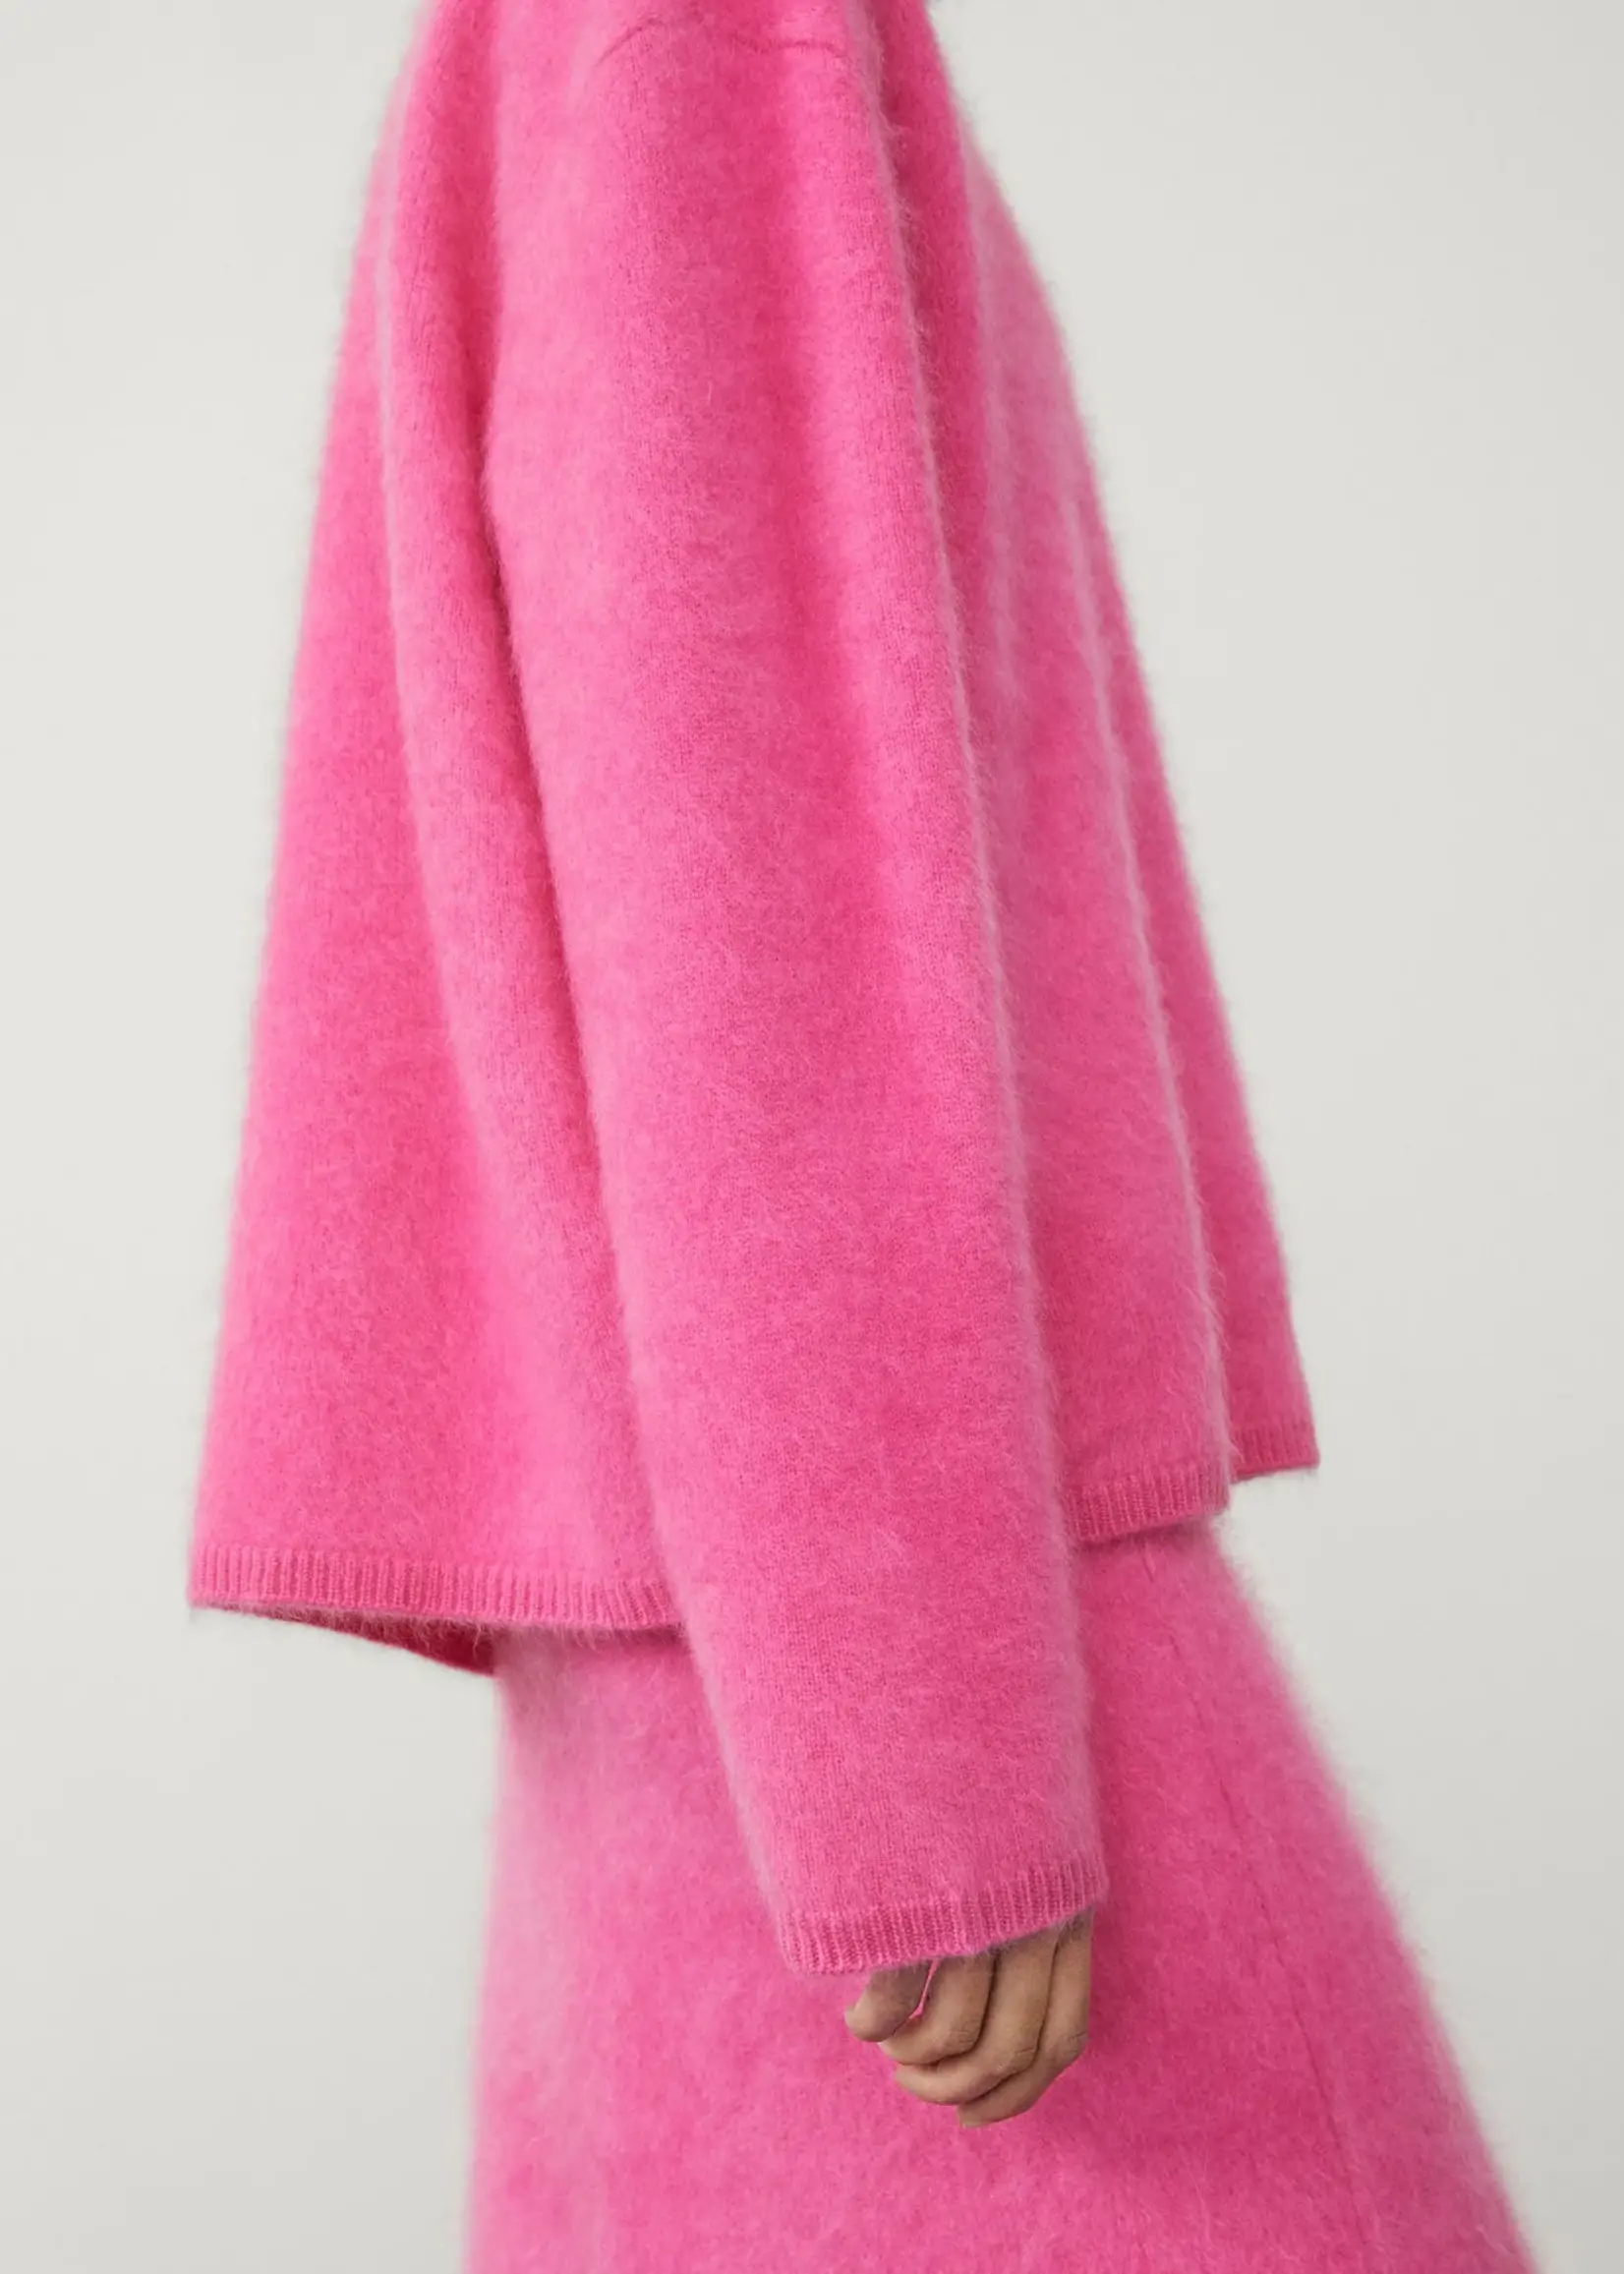 Lisa Yang Natalia sweater - Bright rosa